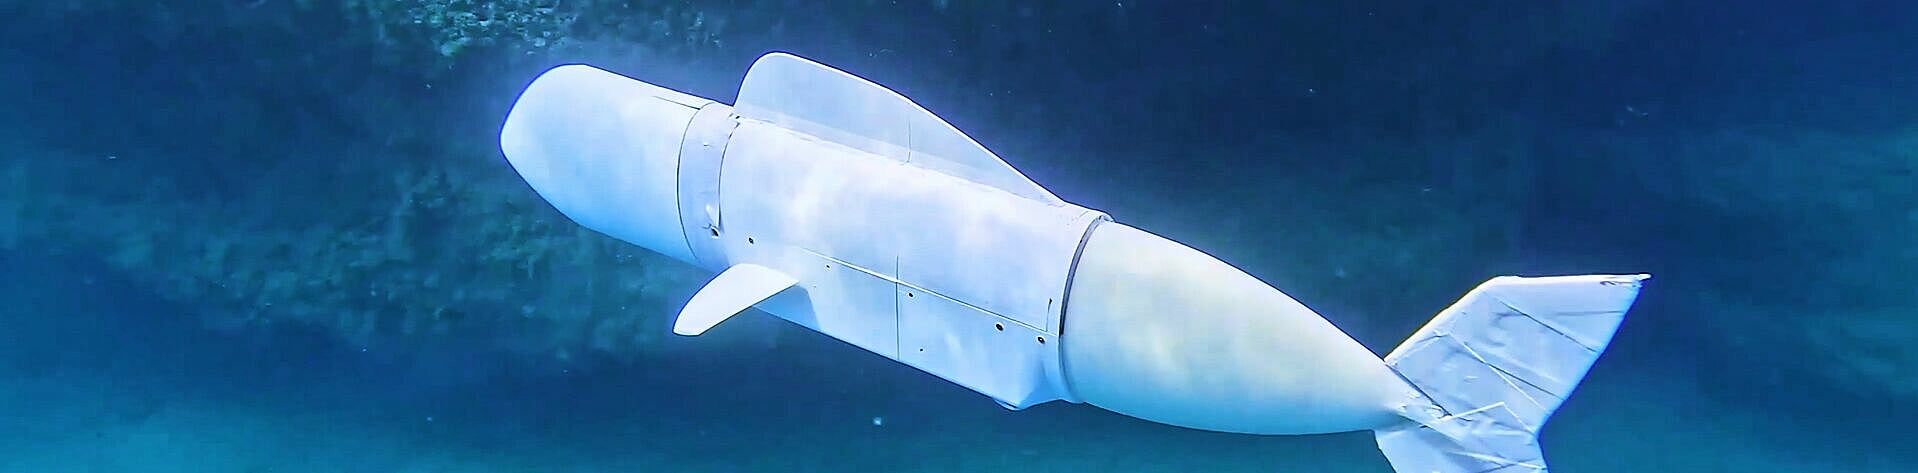 FAULHABER brushless motor for autonomous Robot fish underwater application